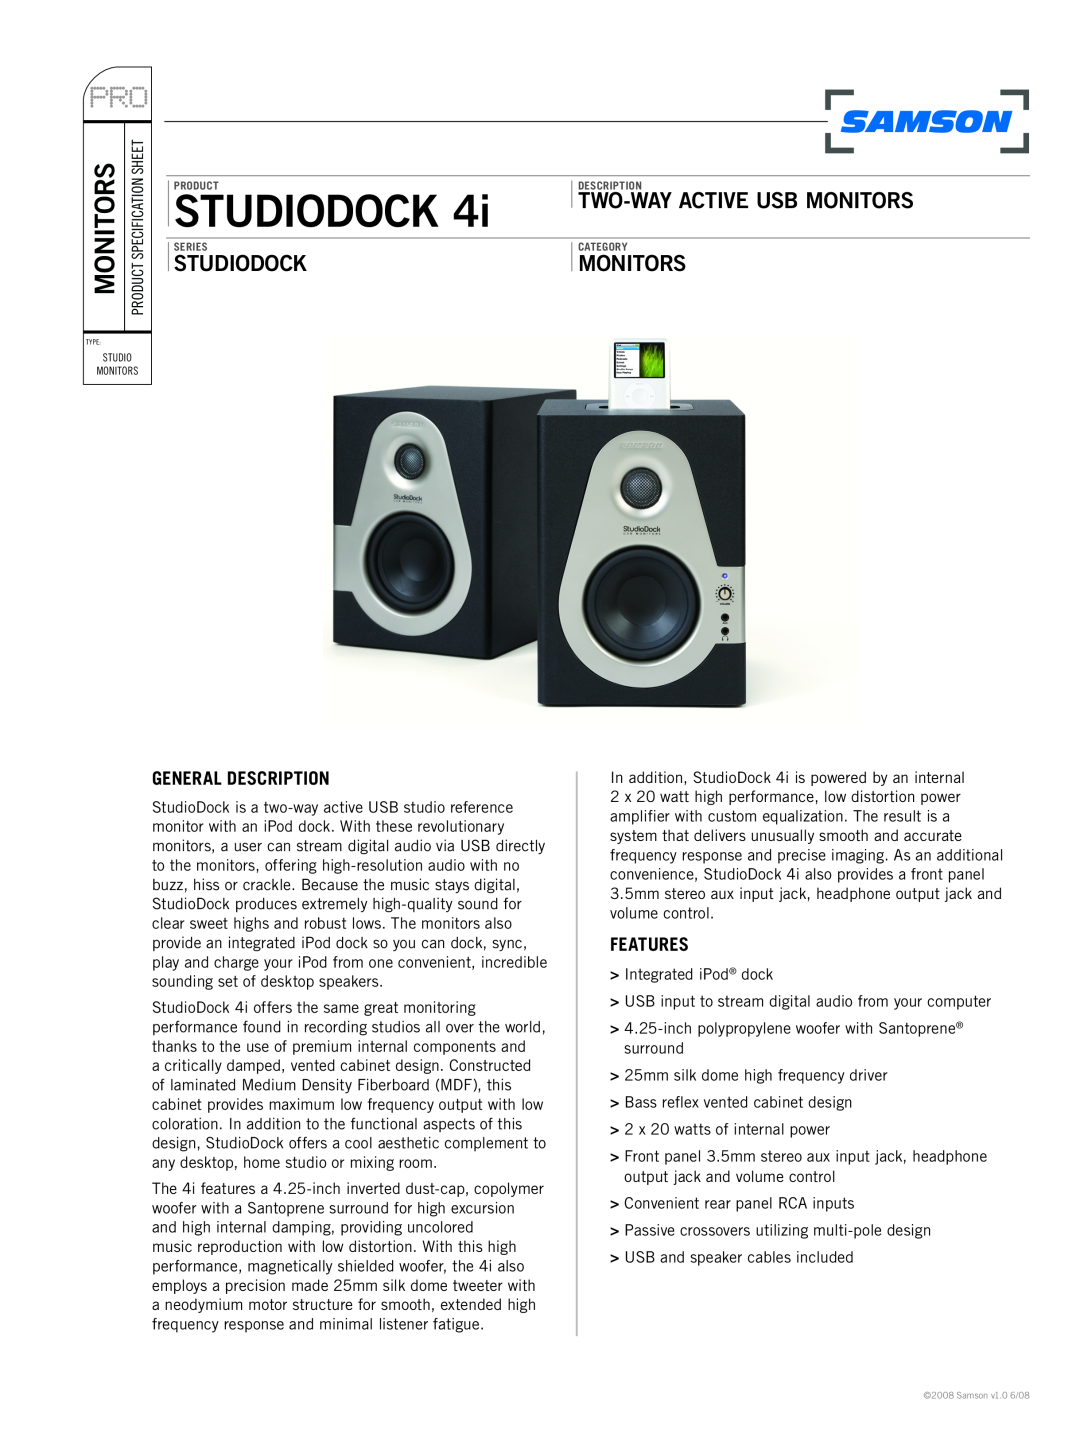 Samson STUDIODOCK 4i specifications General Description, Features, Studiodock, Two-Wayactive Usb Monitors 